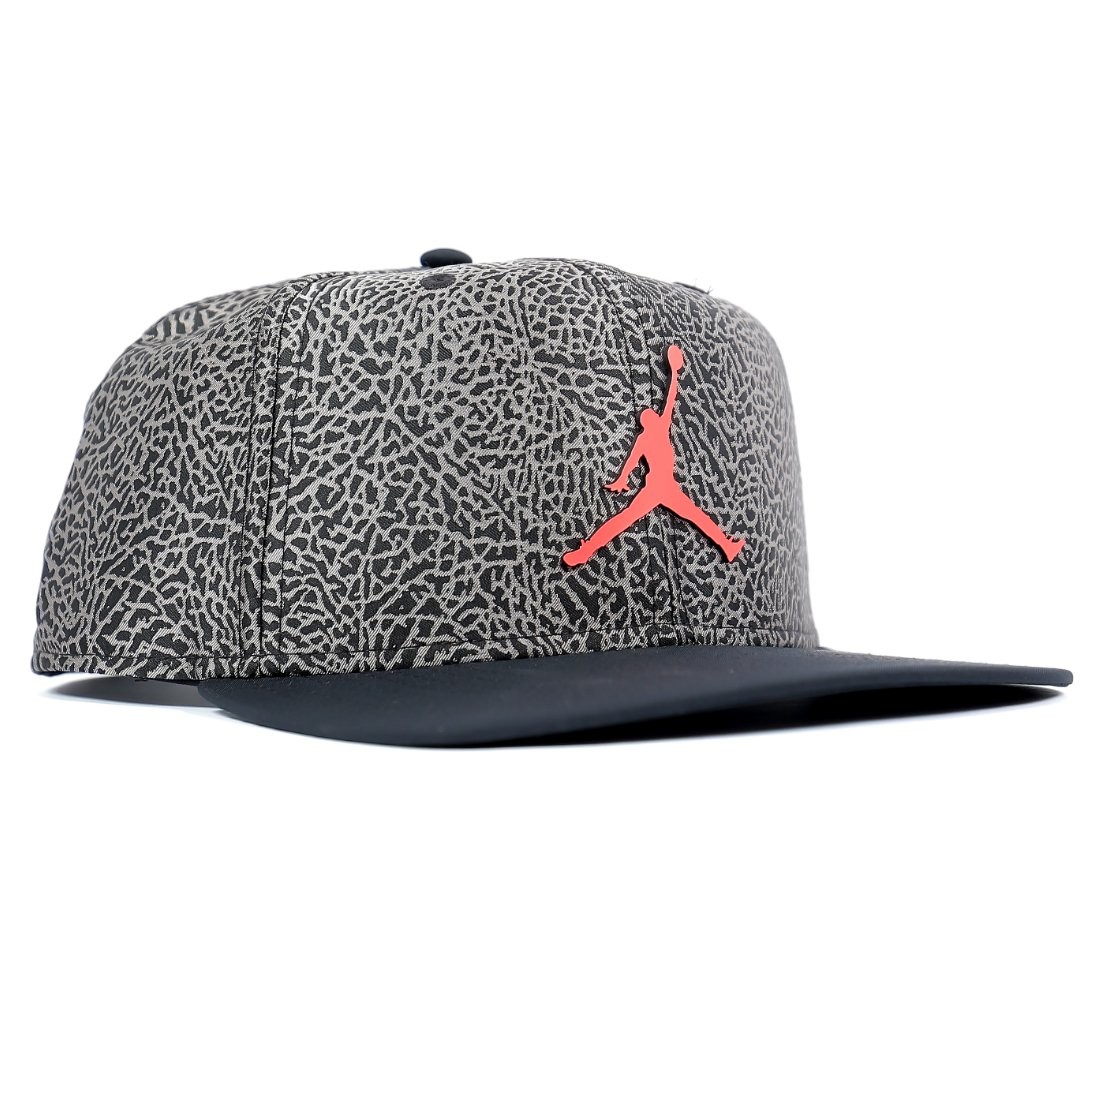 Jordan Men Pro Cap (atmosphere grey / black / black / infrared 23)